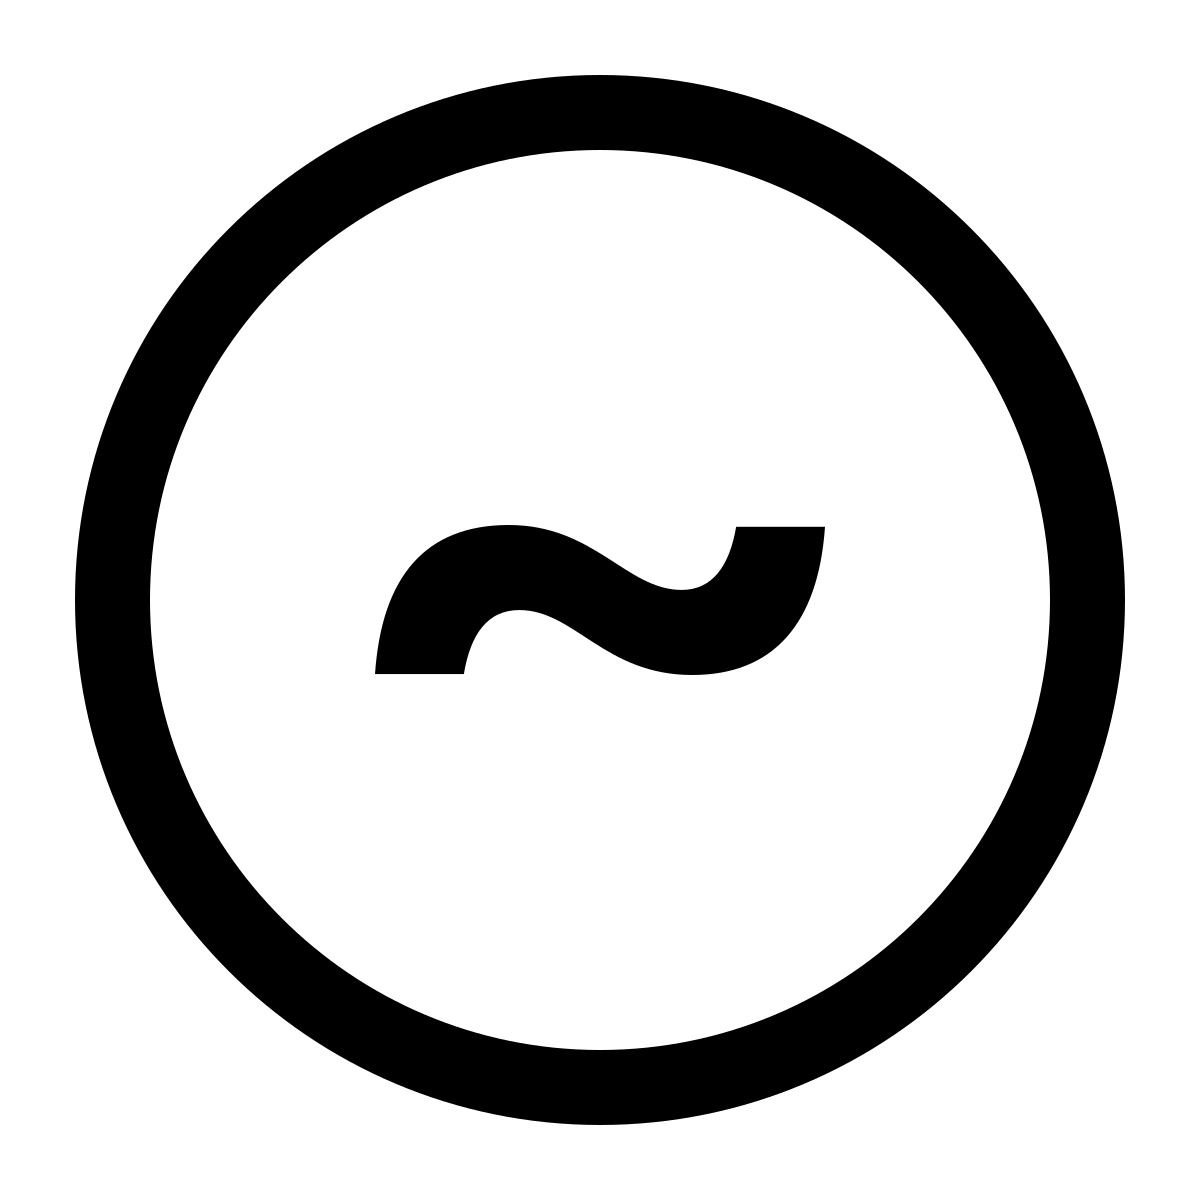 The logo of Urbit.